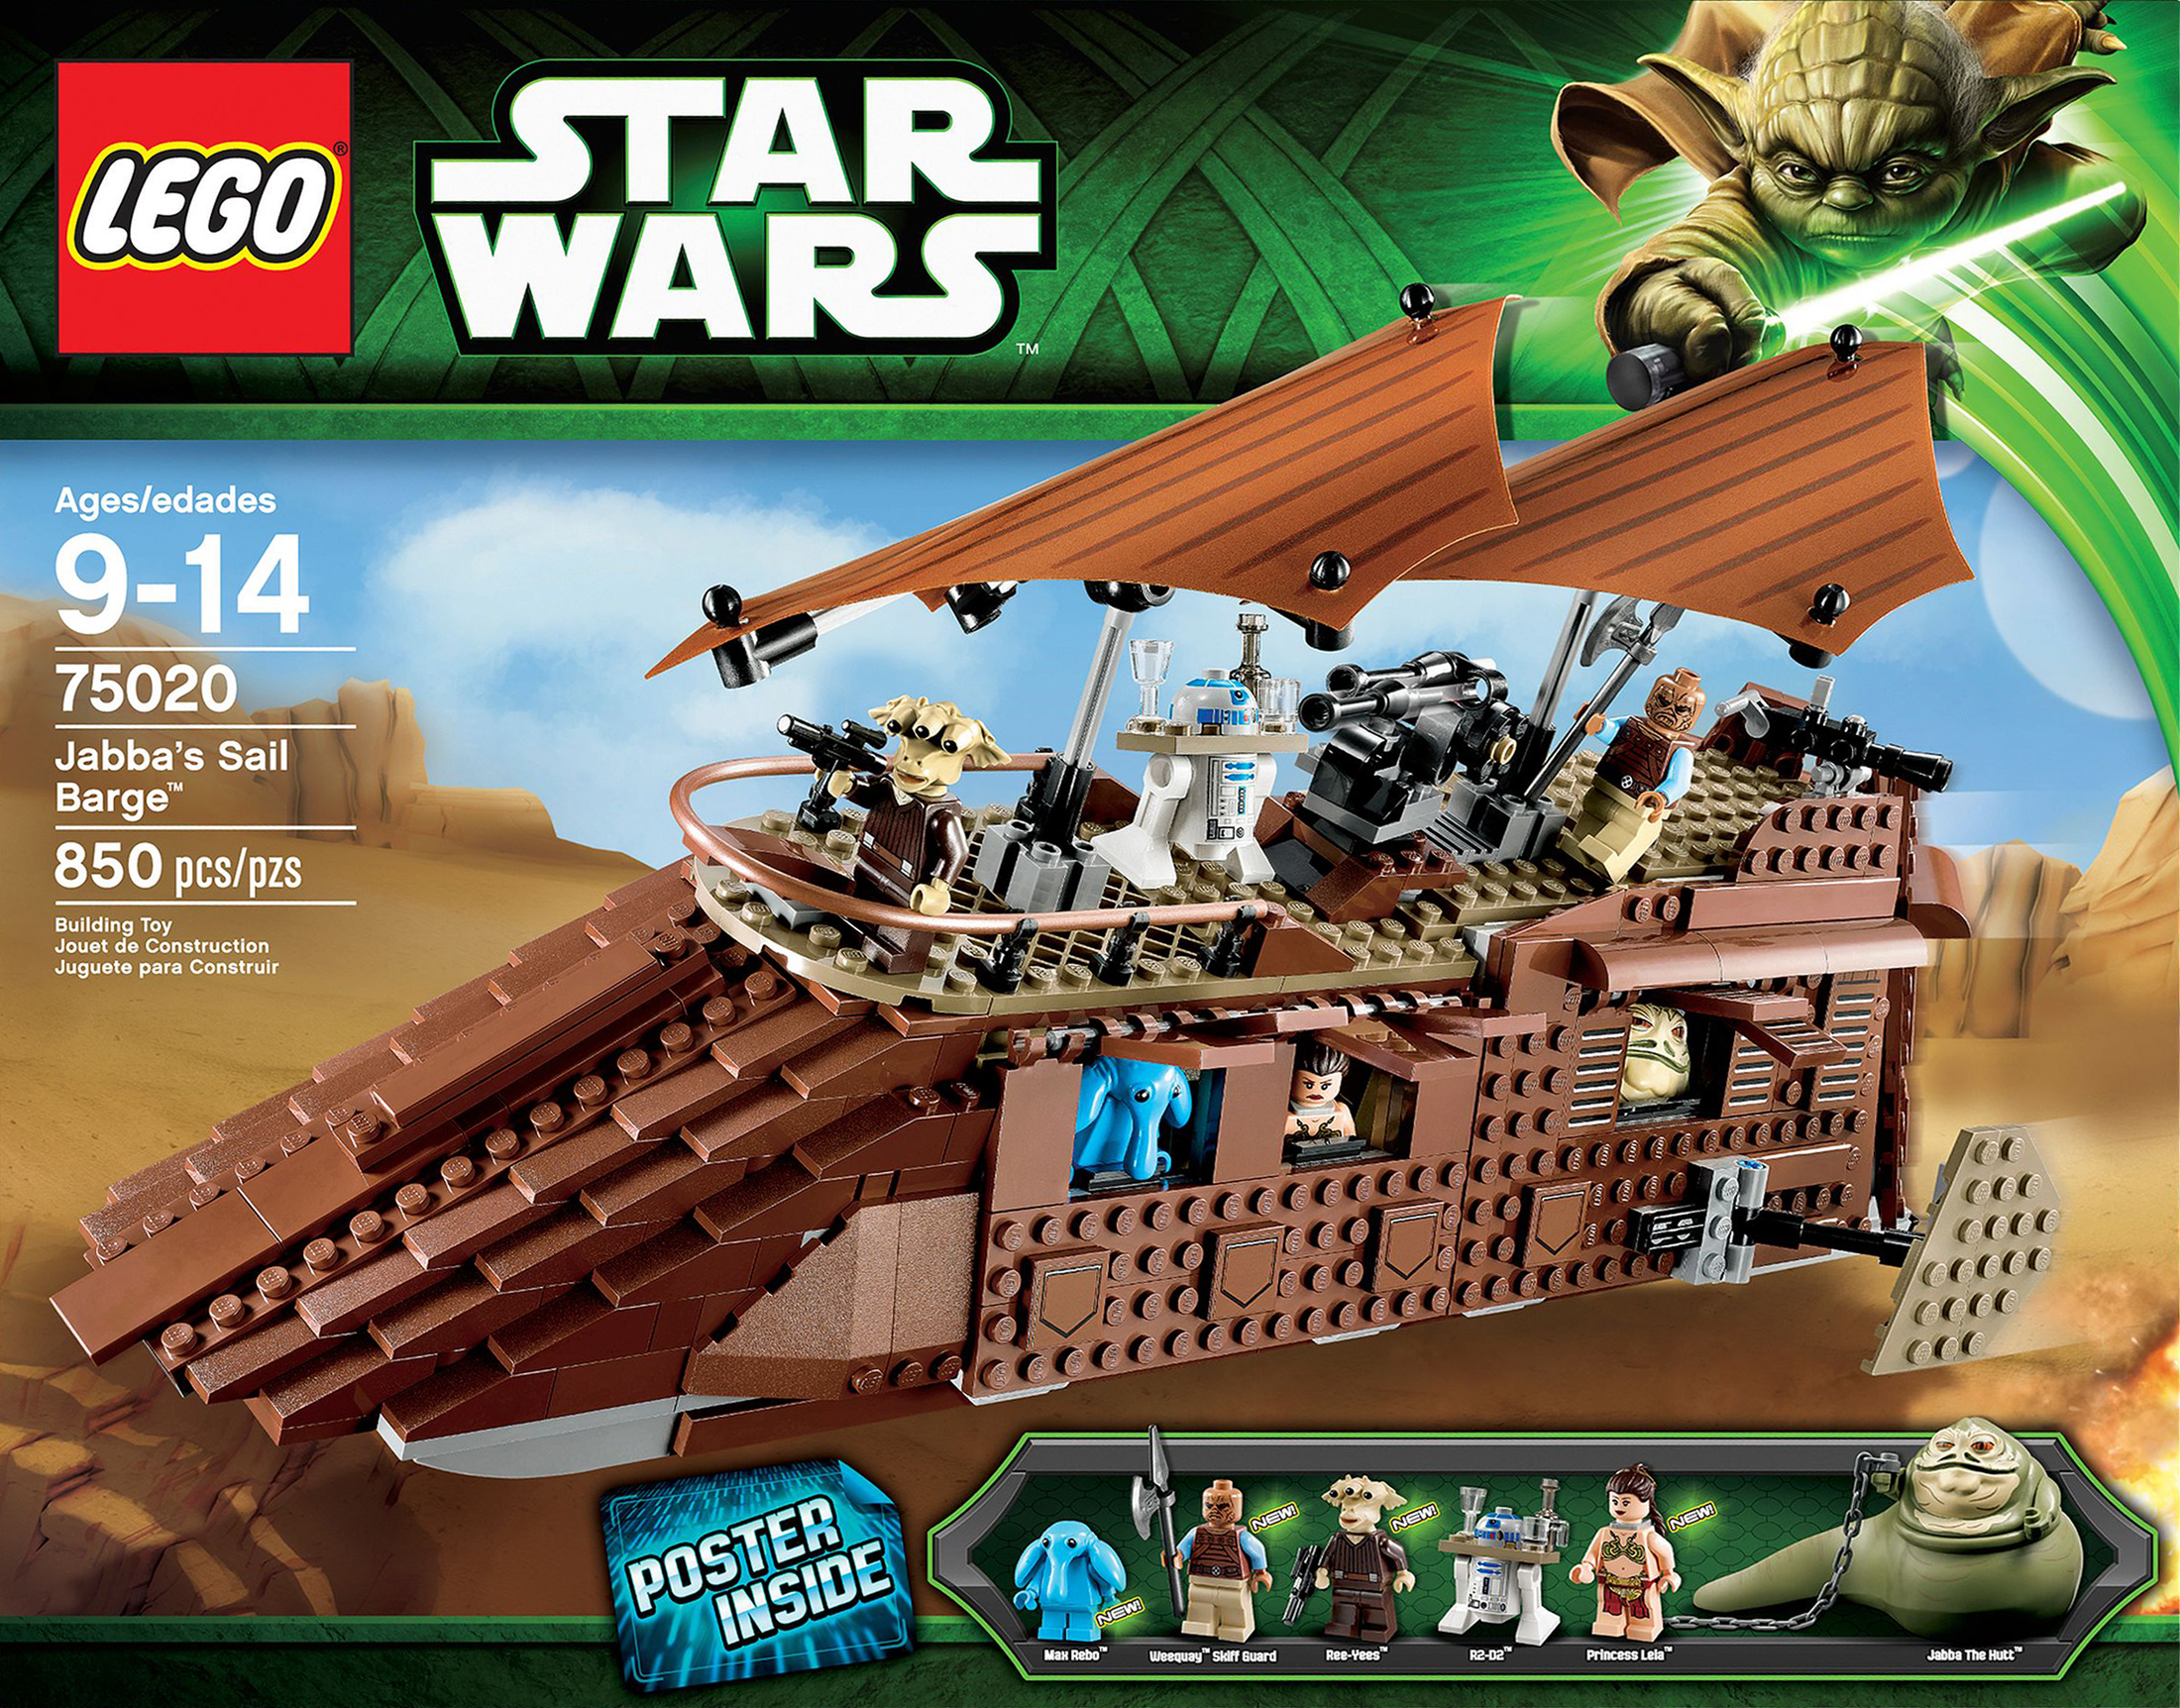 2013 LEGO Star Wars Fall Assortment Now Available - FBTB